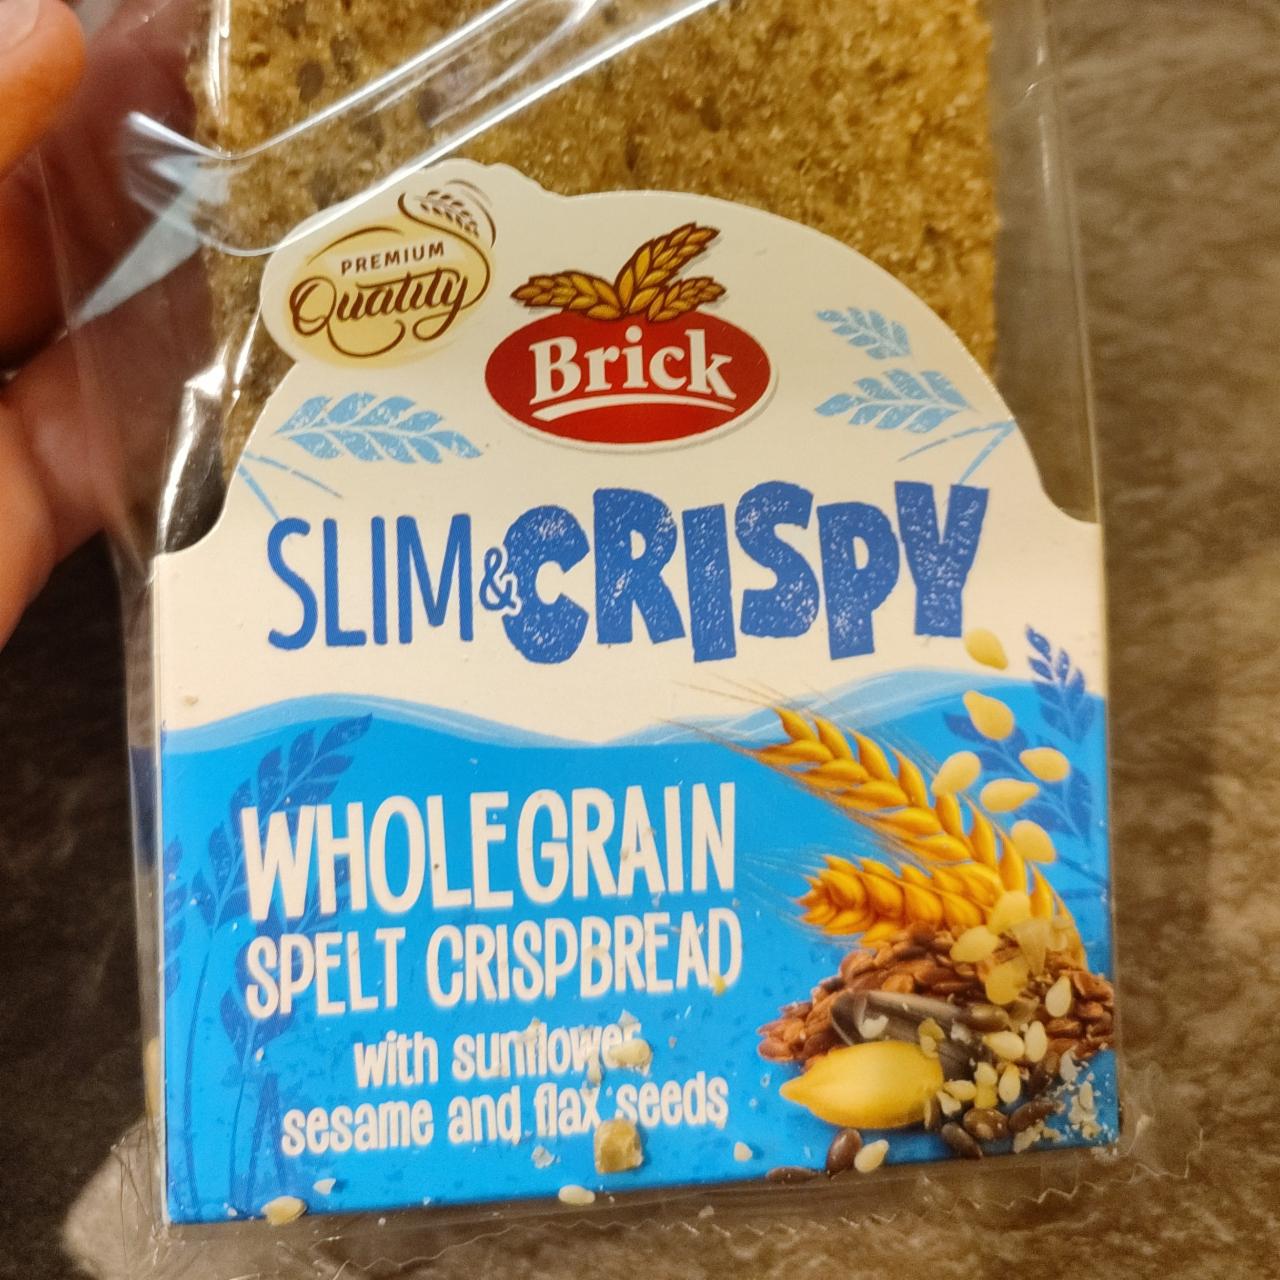 Fotografie - Slim & Crispy Wholegrain spelt crispbread Brick